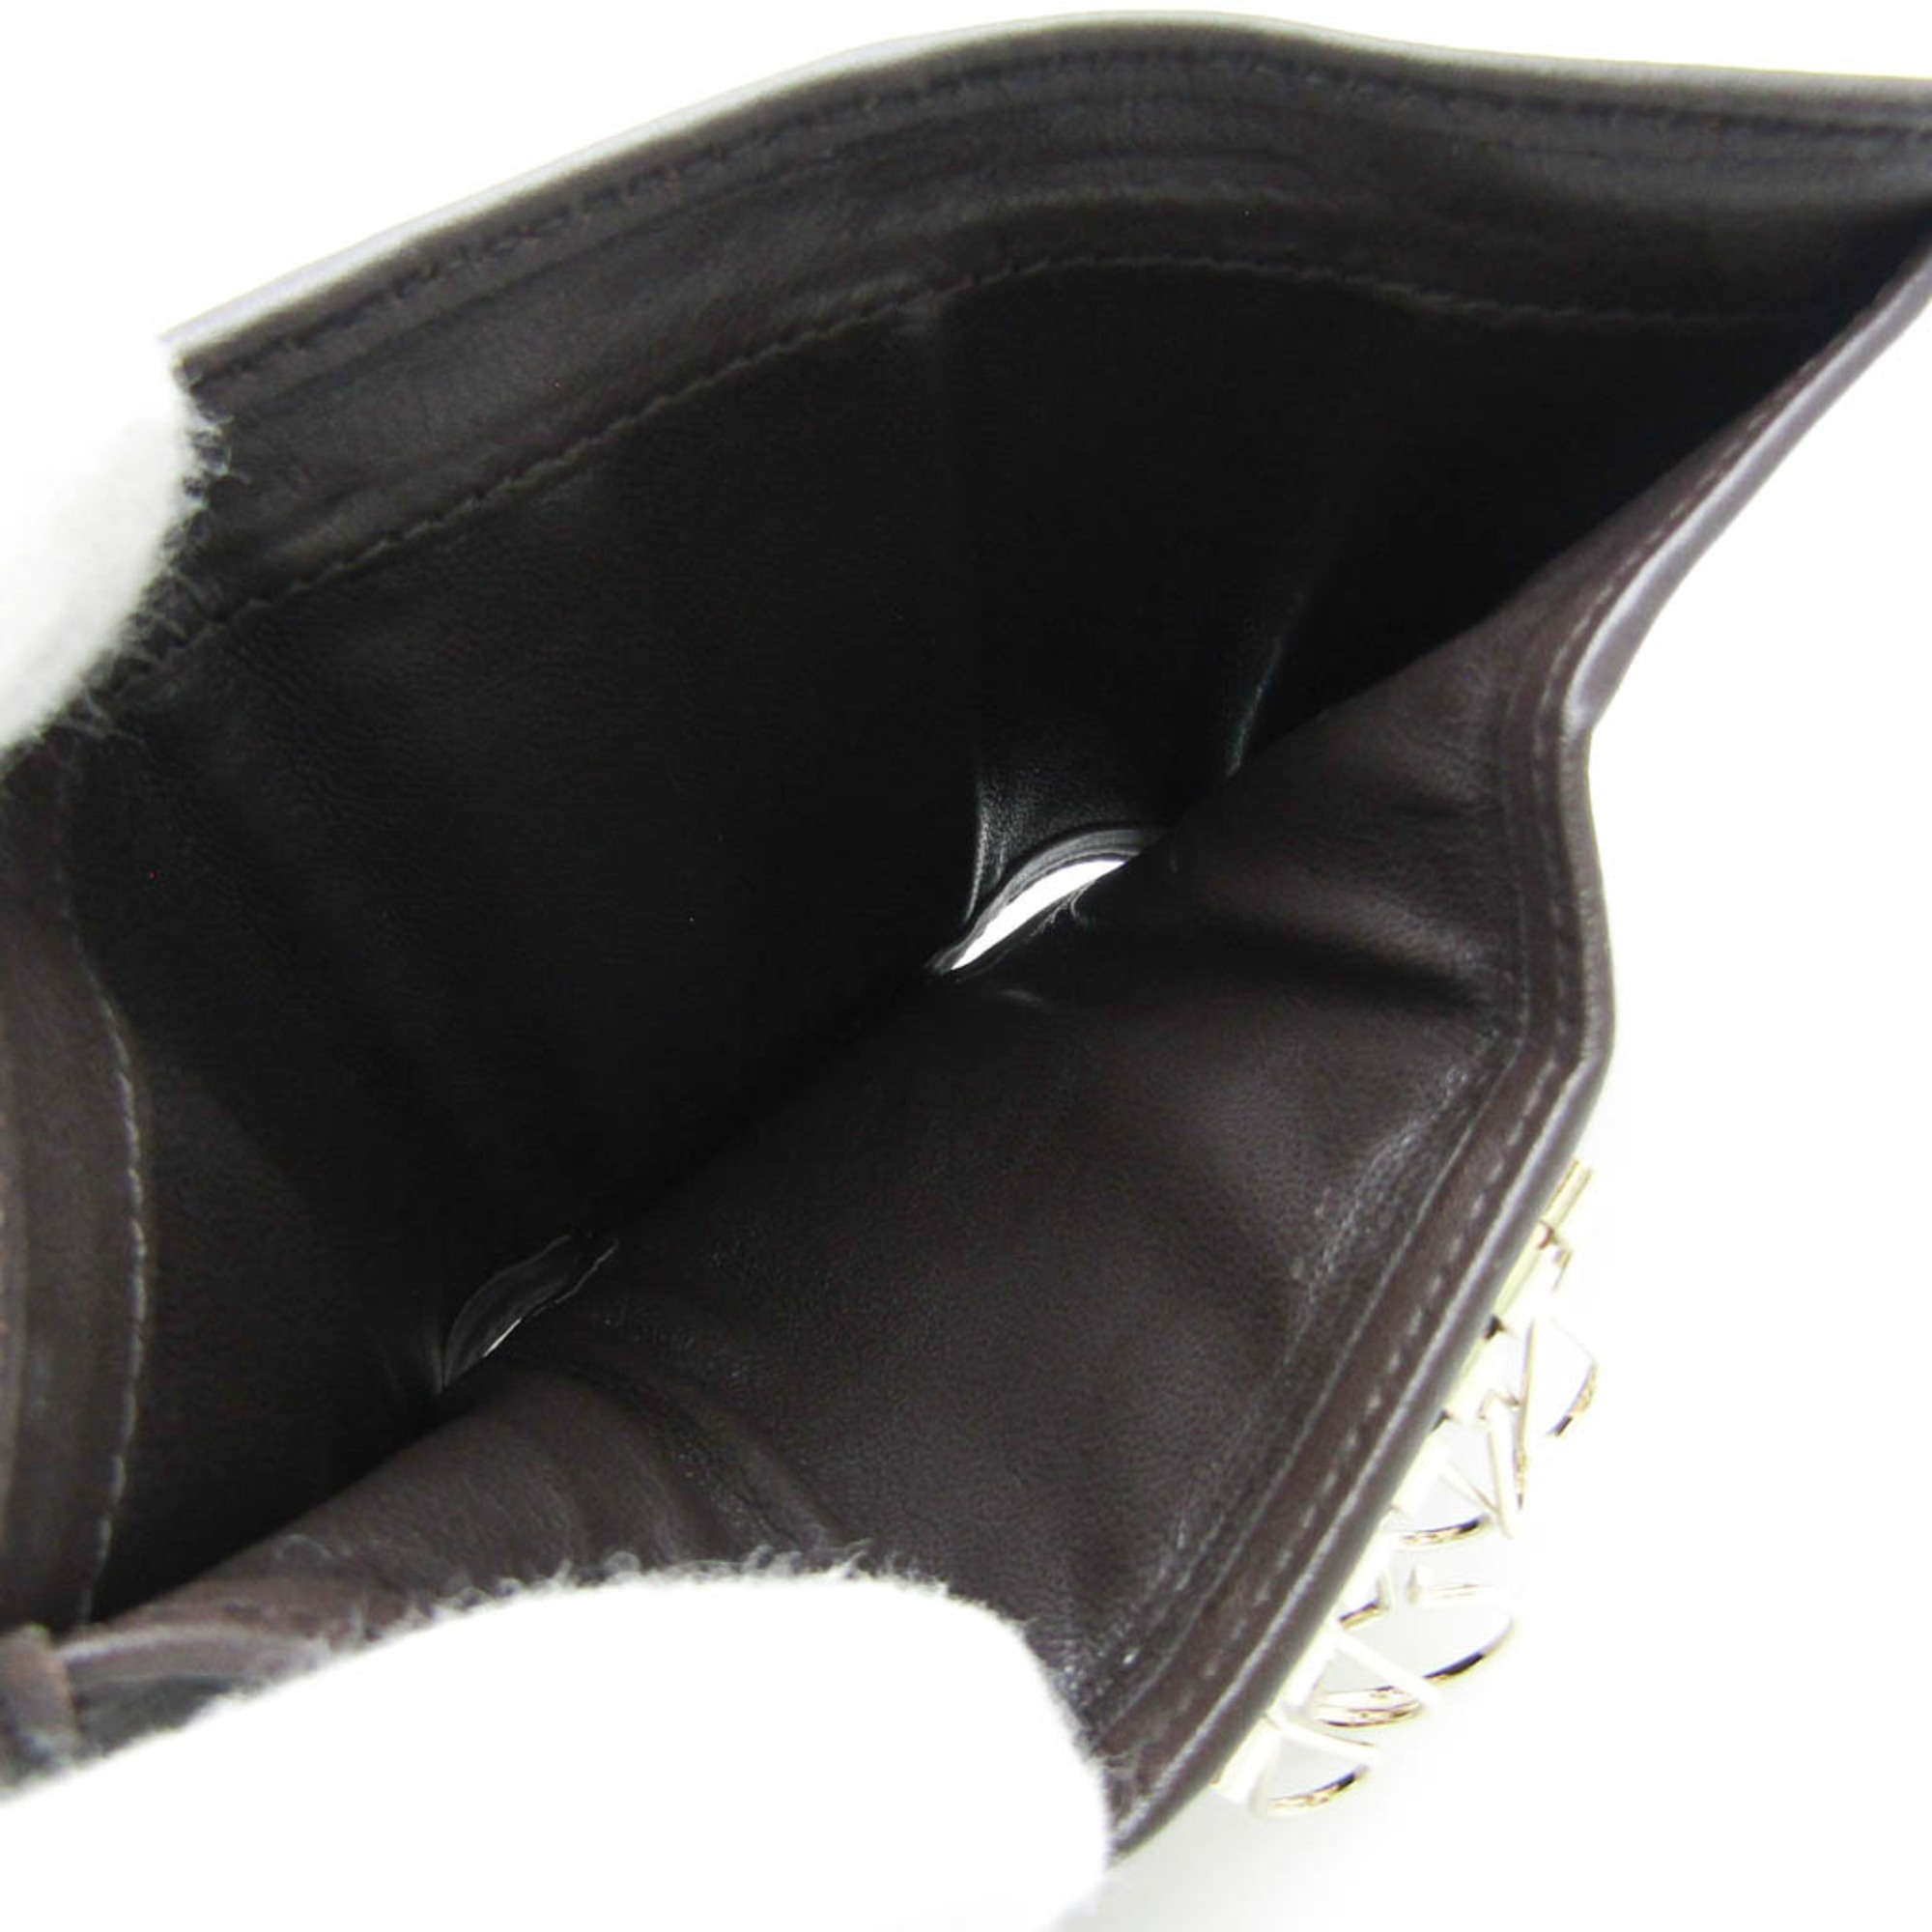 Gucci Tri-fold Compact Wallet 268831 Women,Men Leather GG Canvas Key Case Beige,Dark Brown